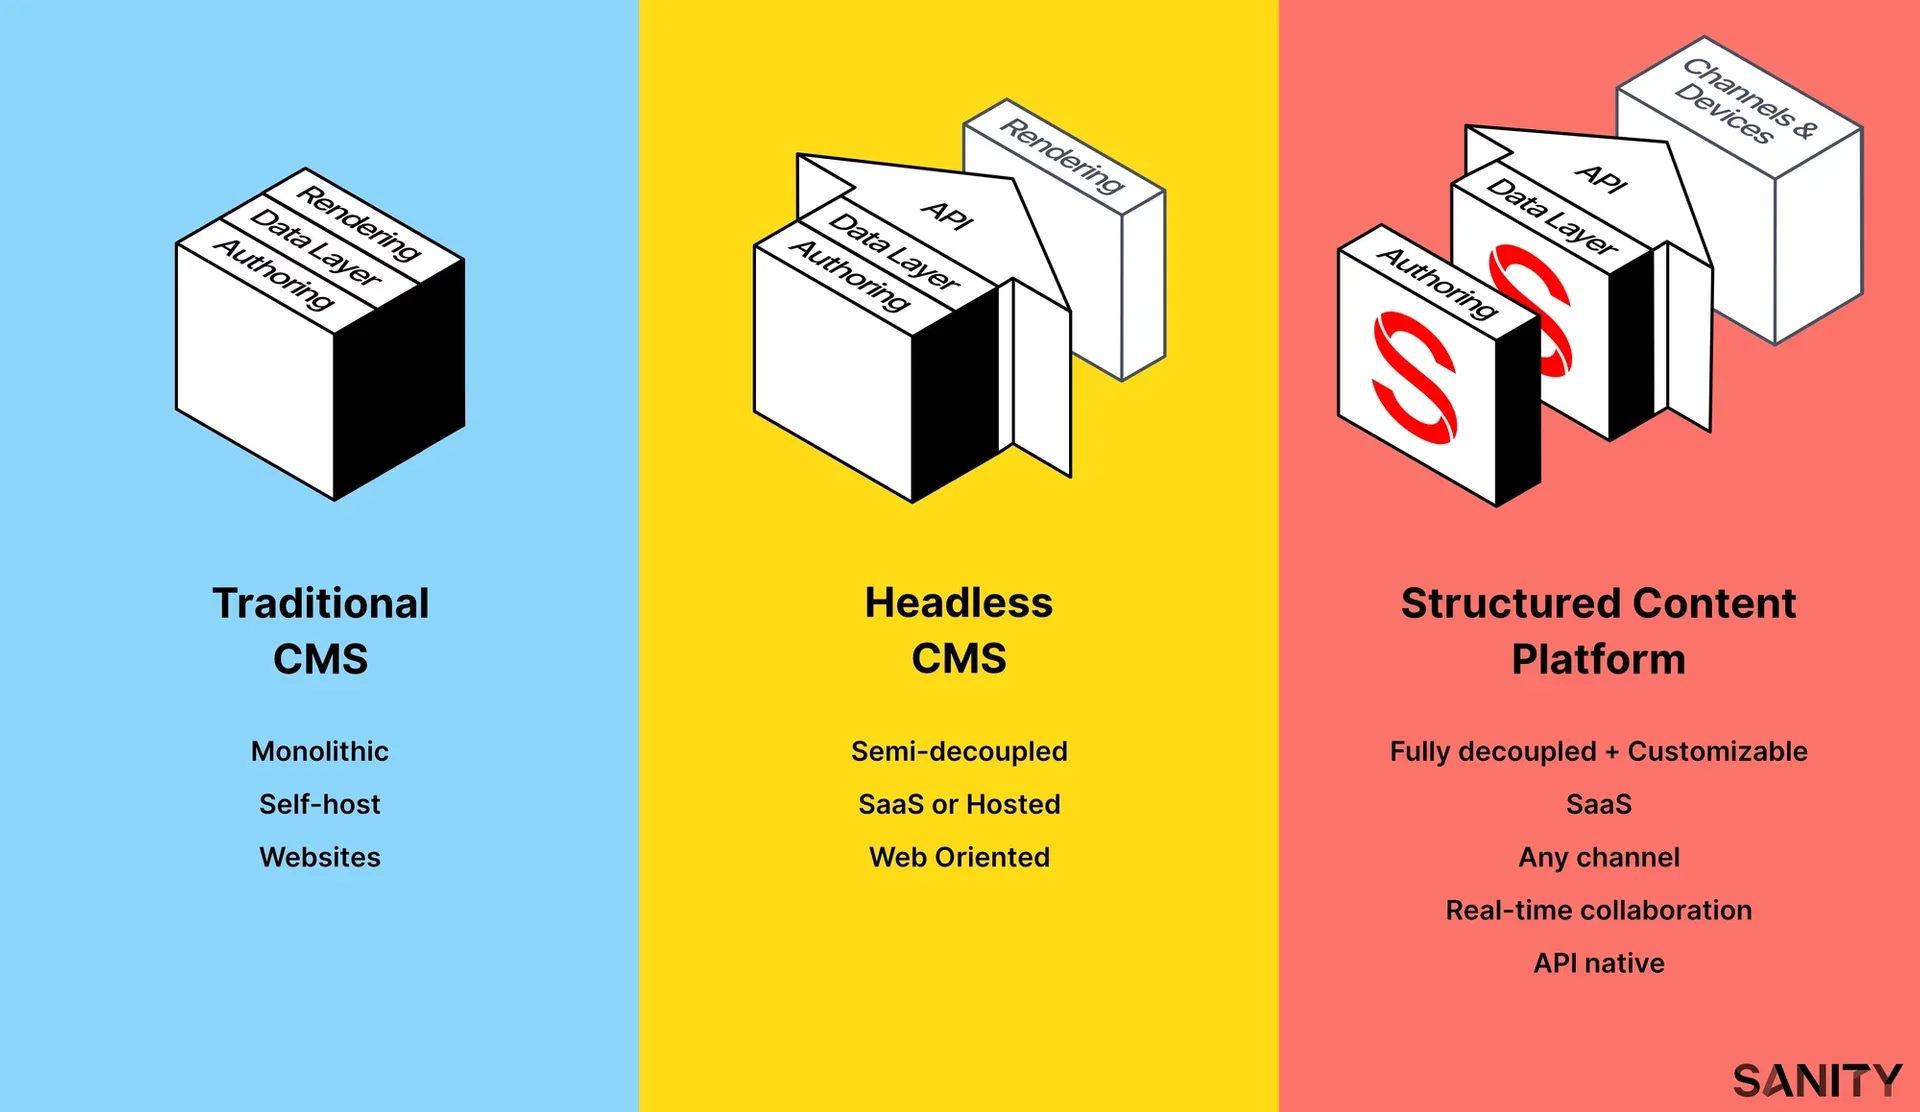 Traidional CMS vs Headless CMS vs Structured Content Platform